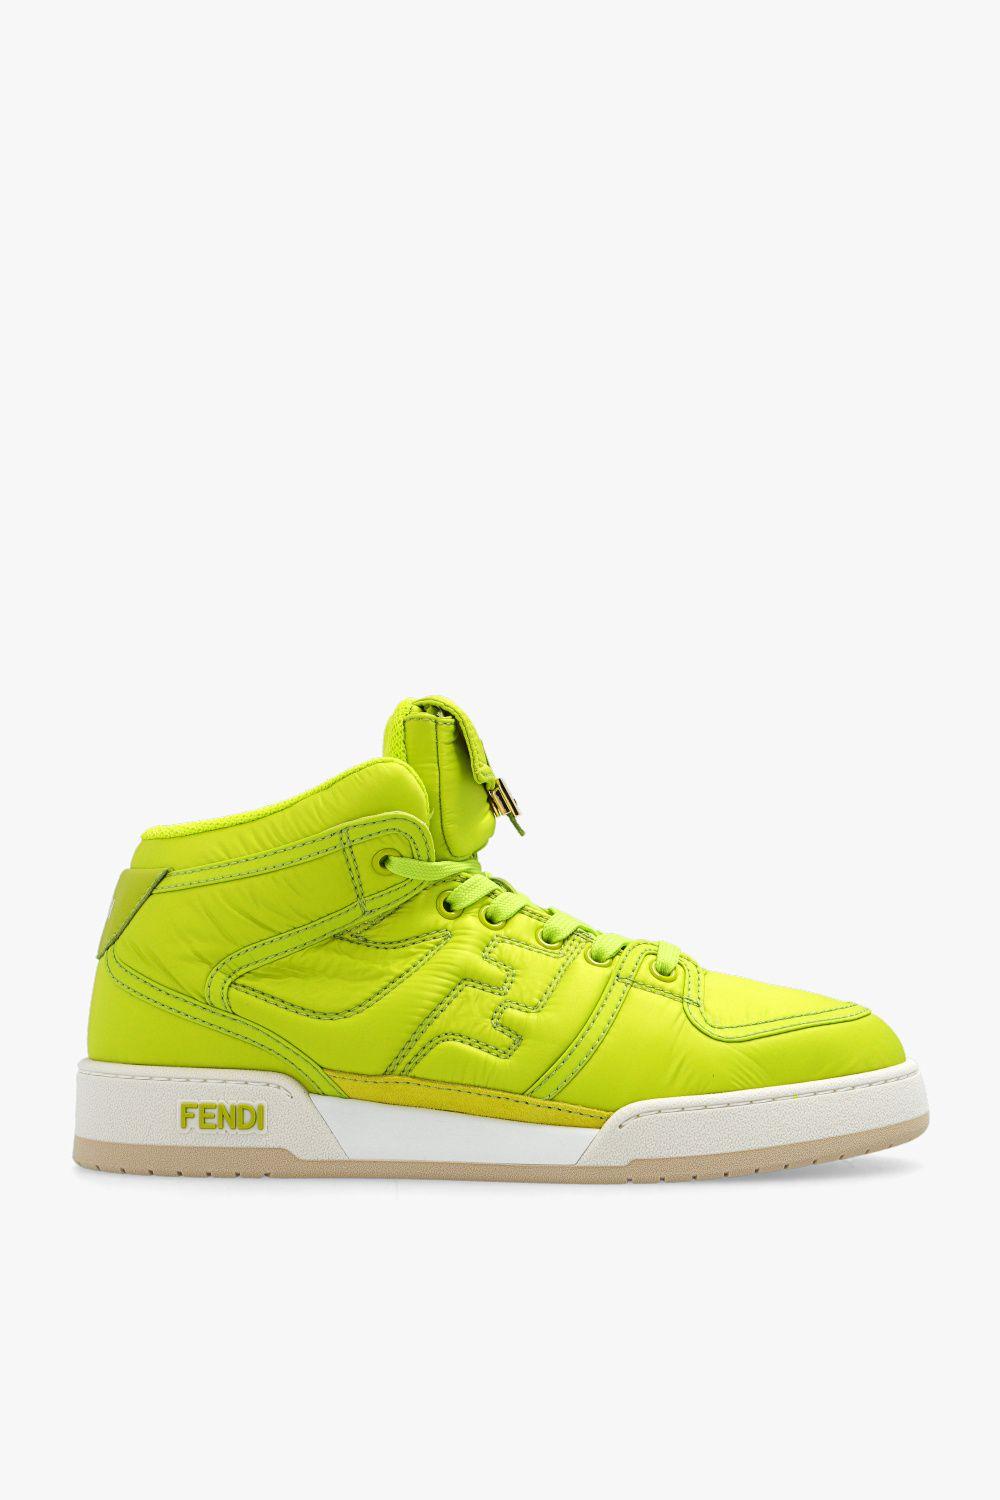 Fendi Neon ' Match' High-top Sneakers in Yellow | Lyst